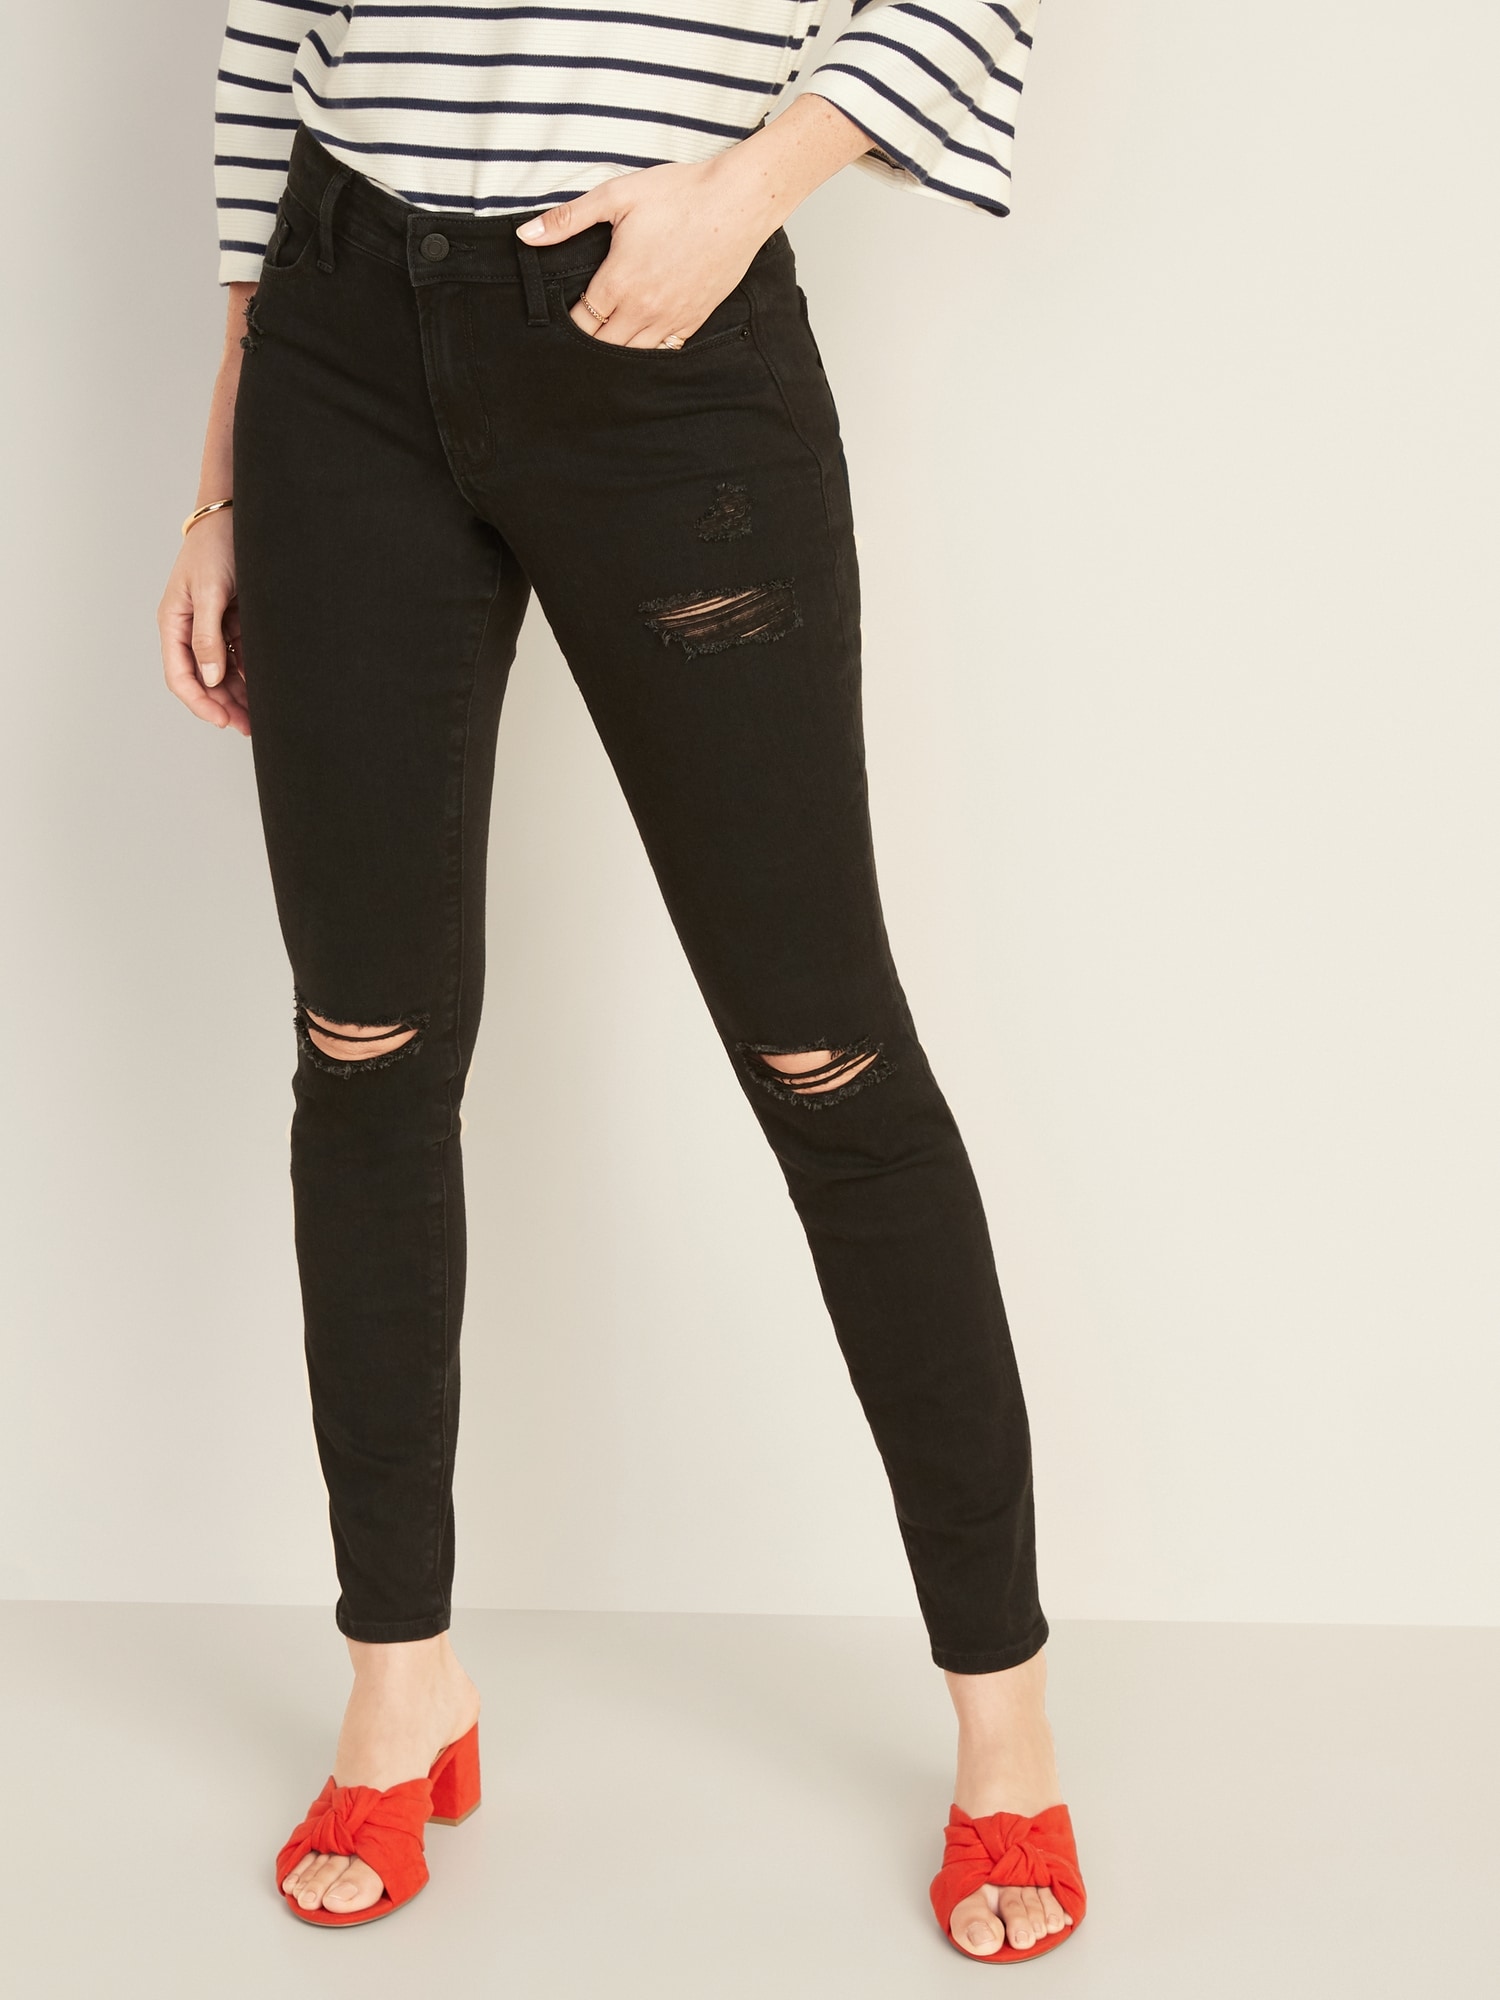 women's petite black skinny jeans